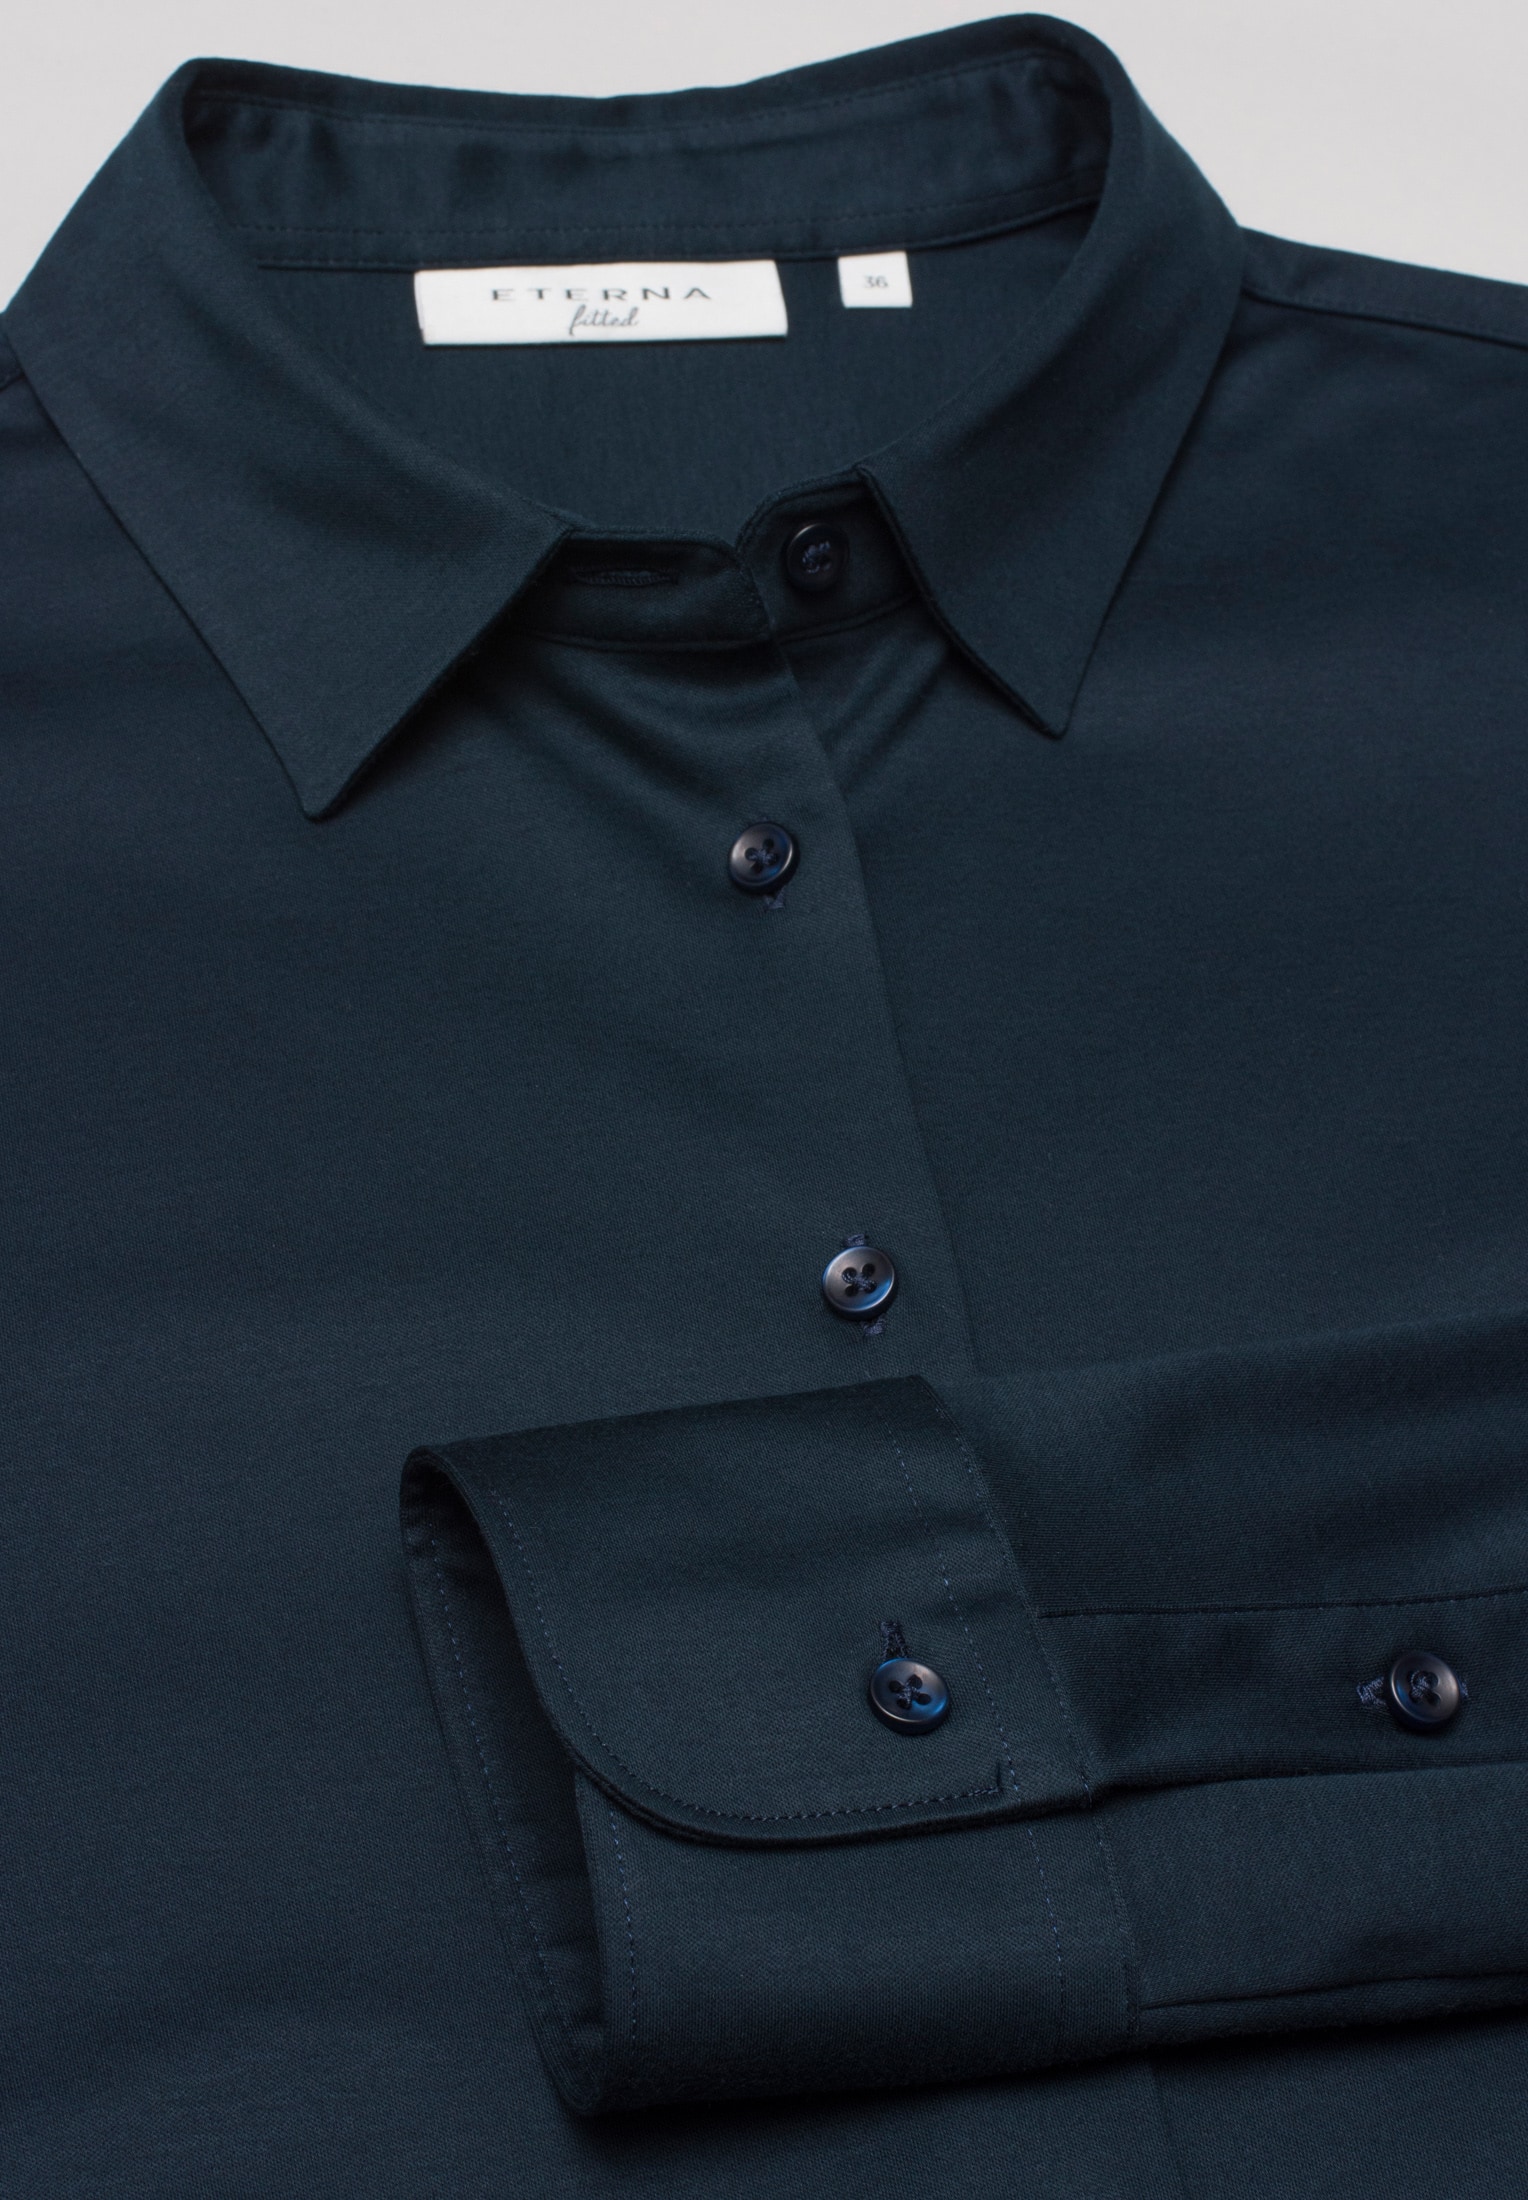 Jersey Shirt Bluse in navy unifarben